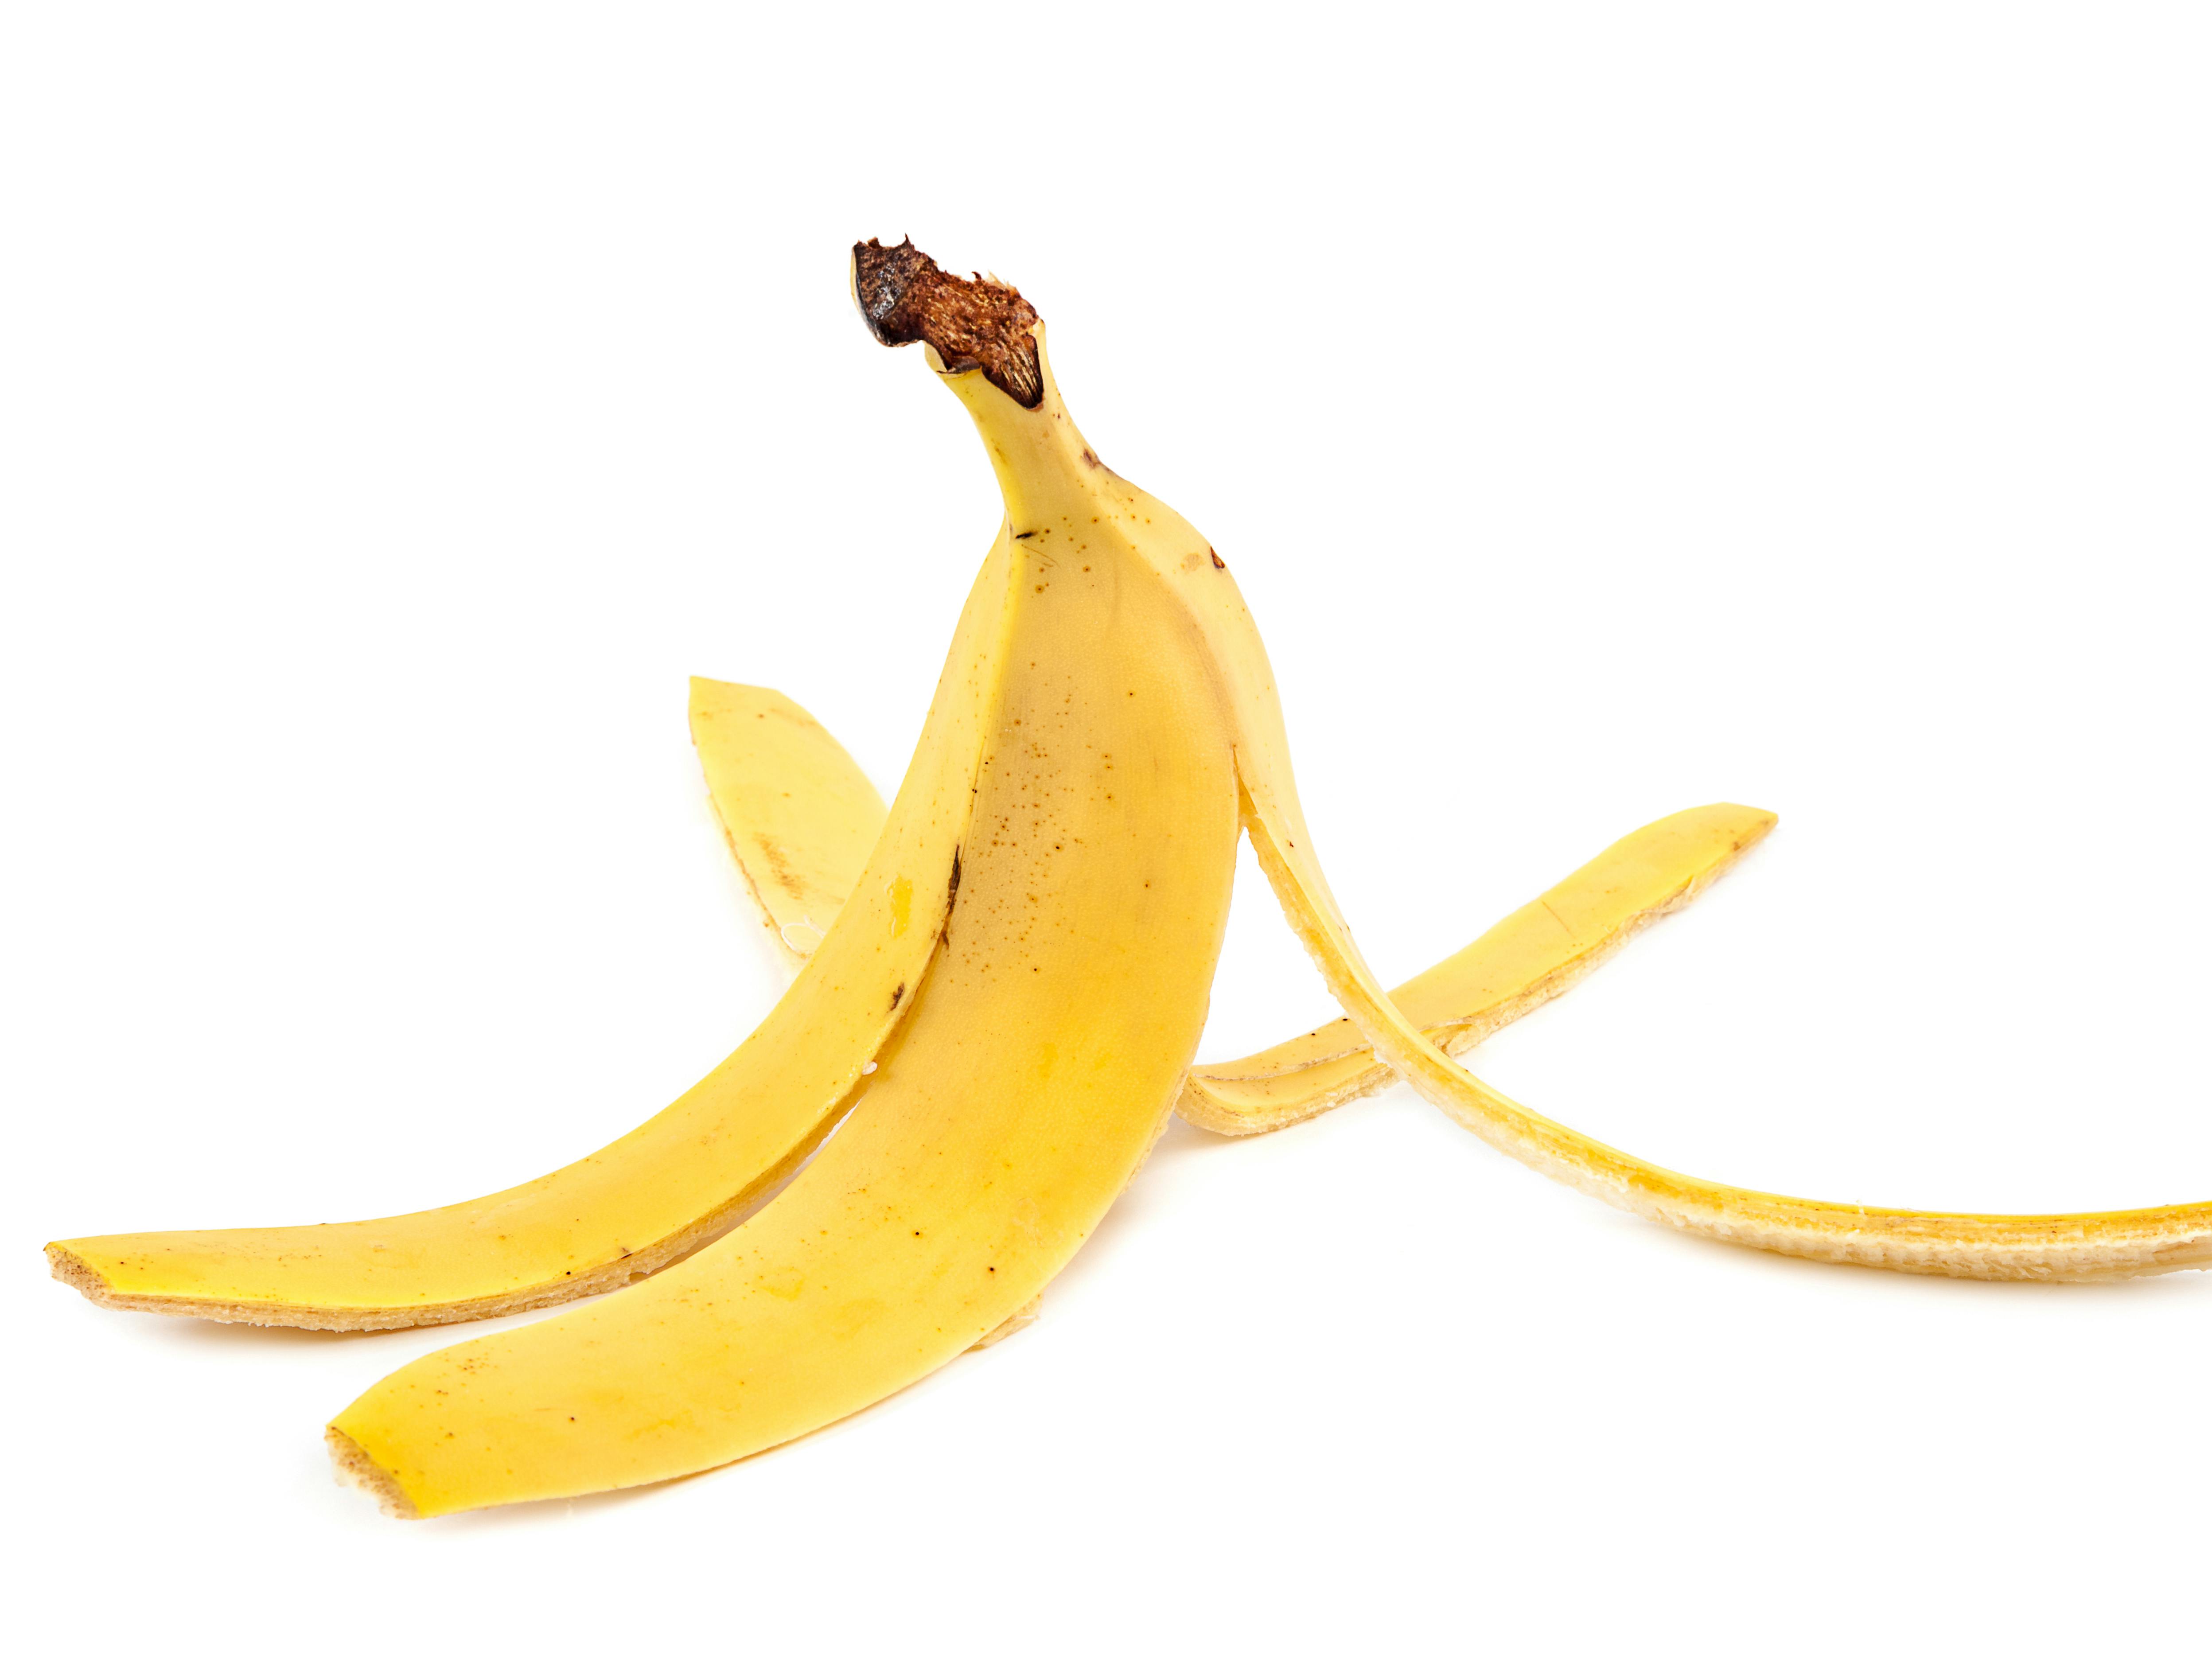 Banana peel isolated on a white background.